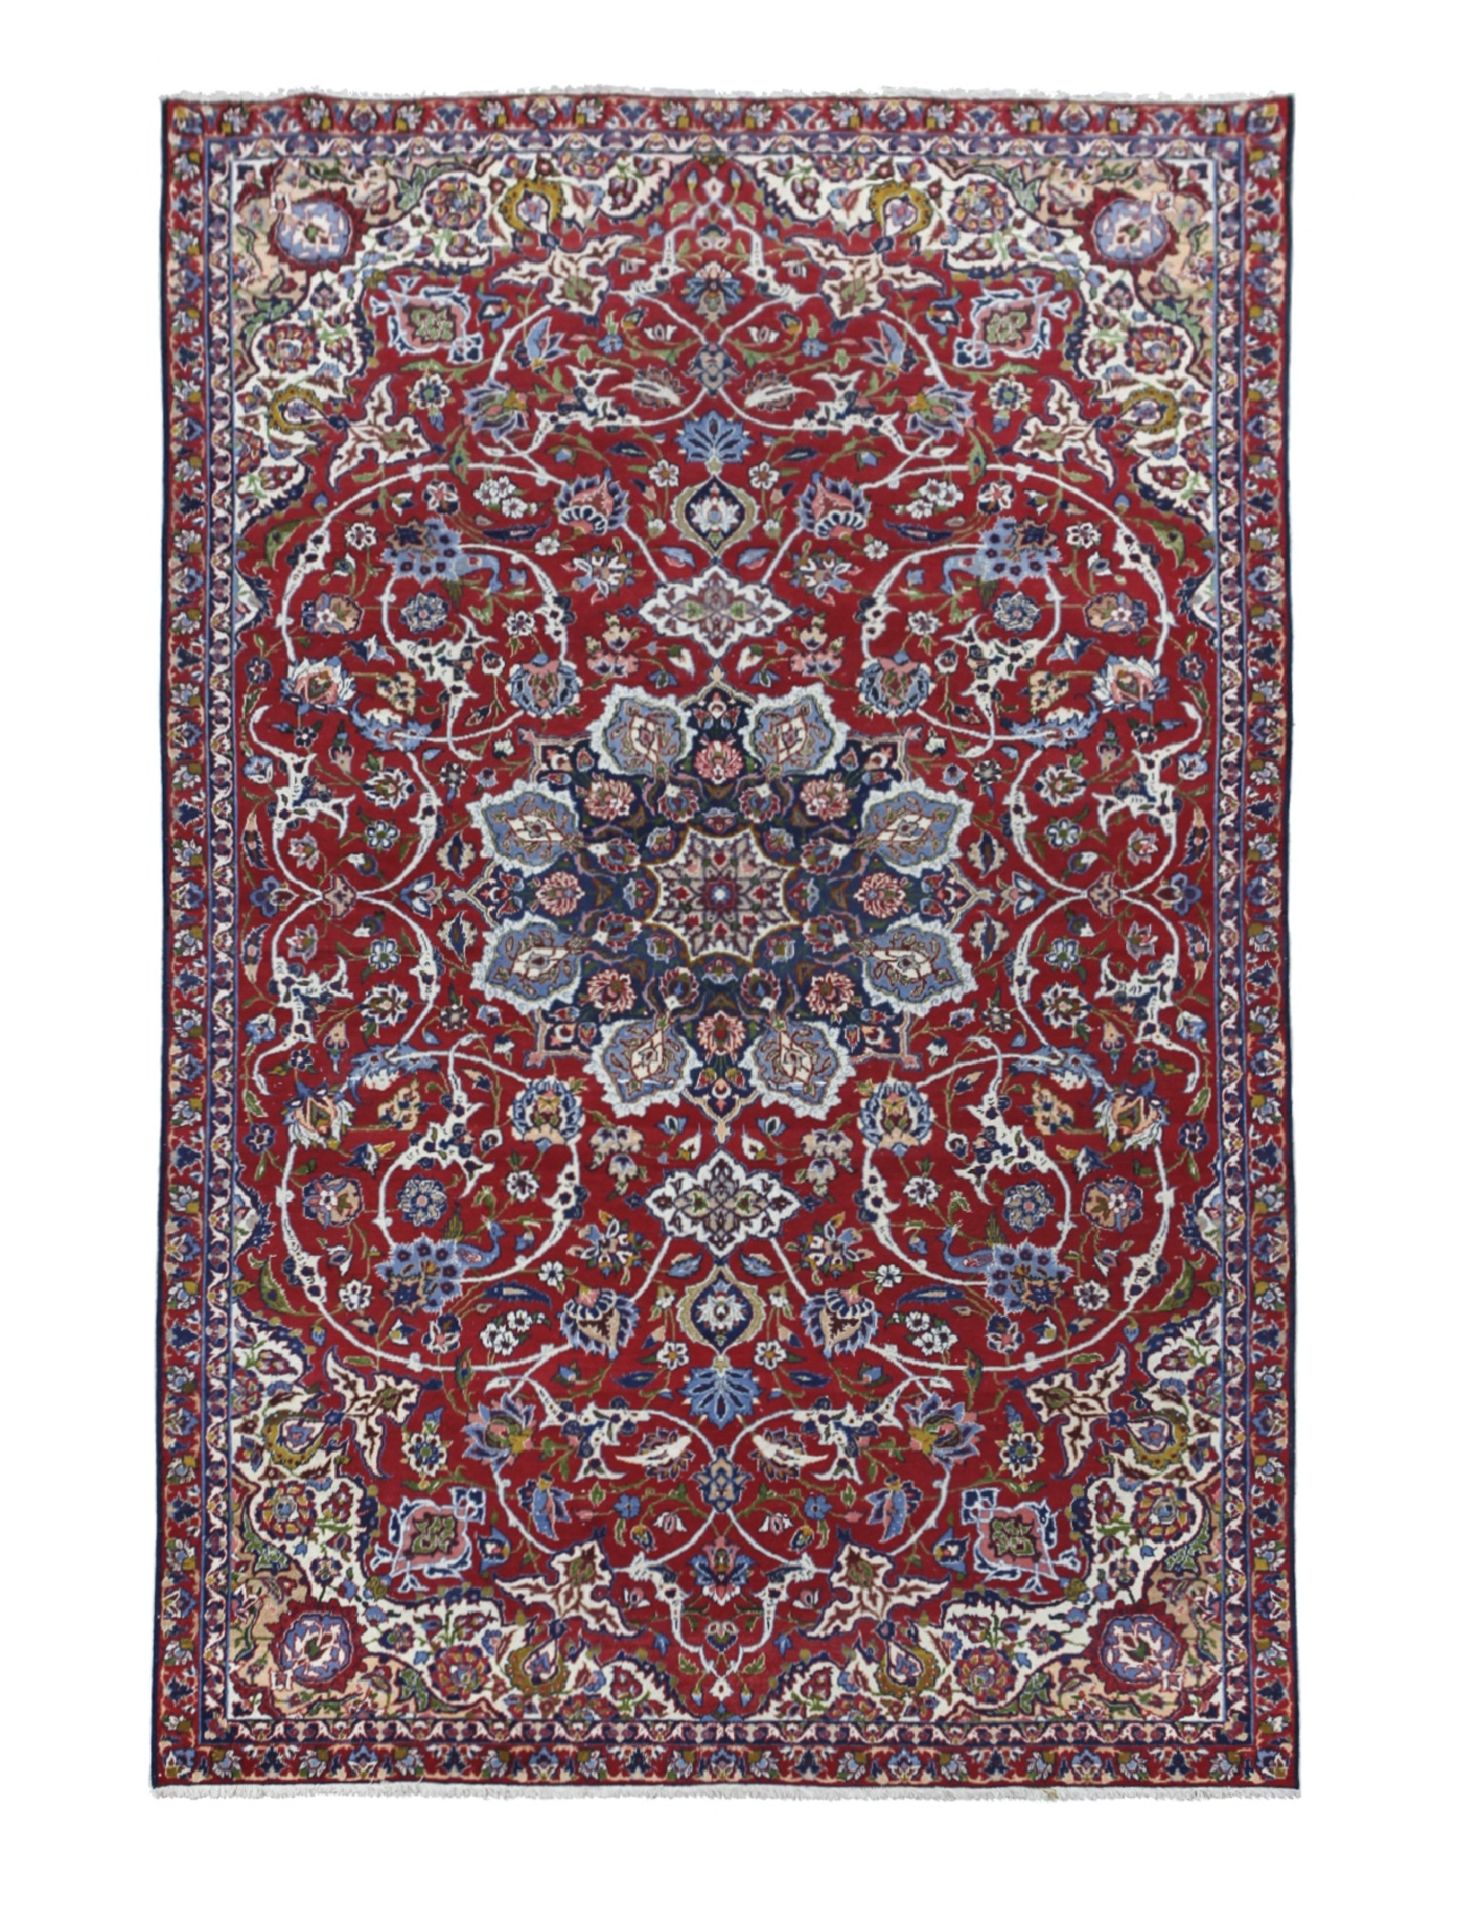 Isfahan Woll-Teppich, 1920-1930 | Isfahan wool carpet, 1920-1930